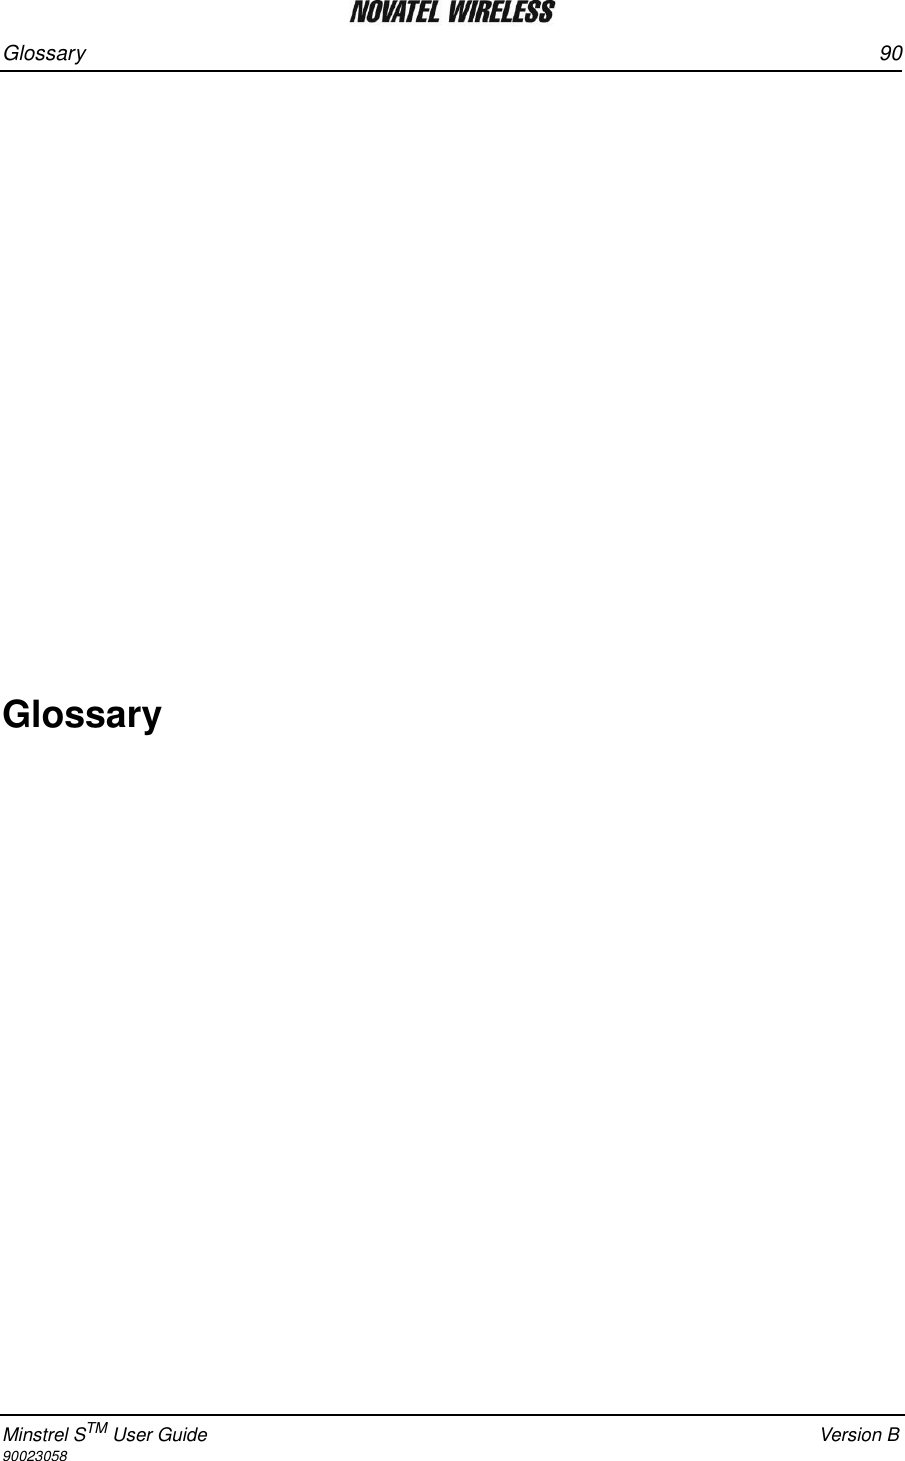 Glossary 90Minstrel STM User Guide Version B90023058Glossary